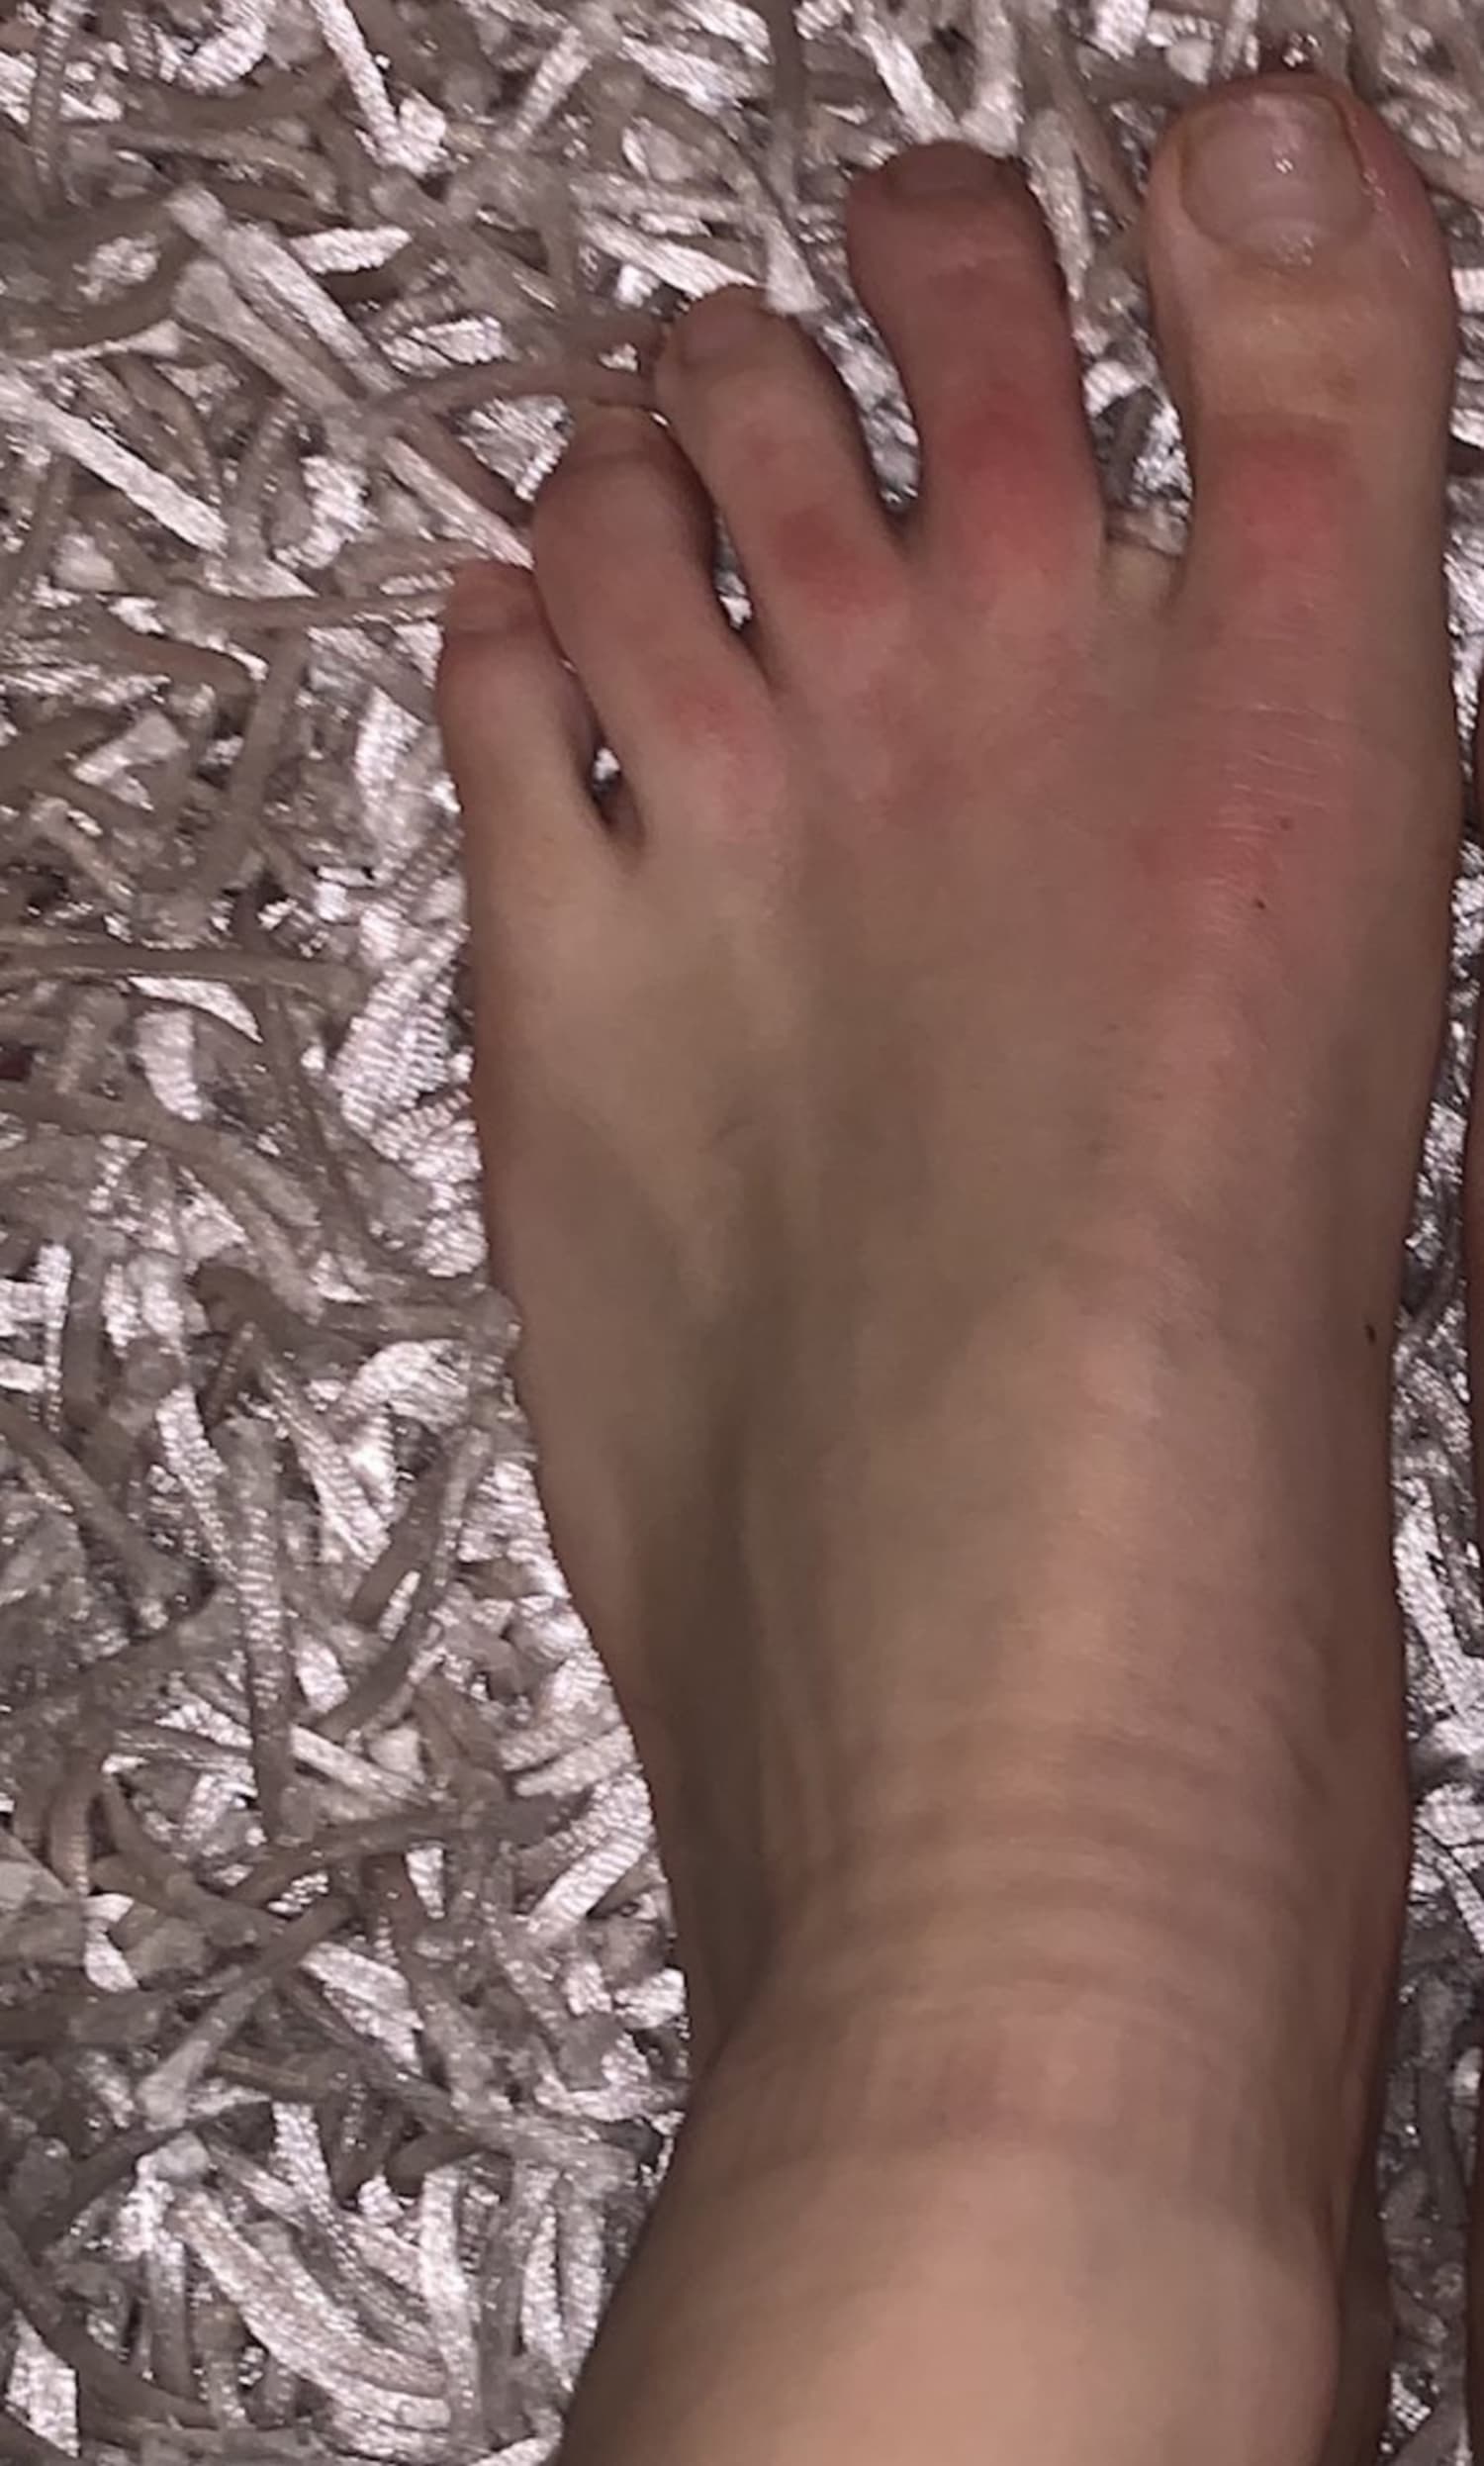 Covid Toes: Dermatologists podiatrists explain toes